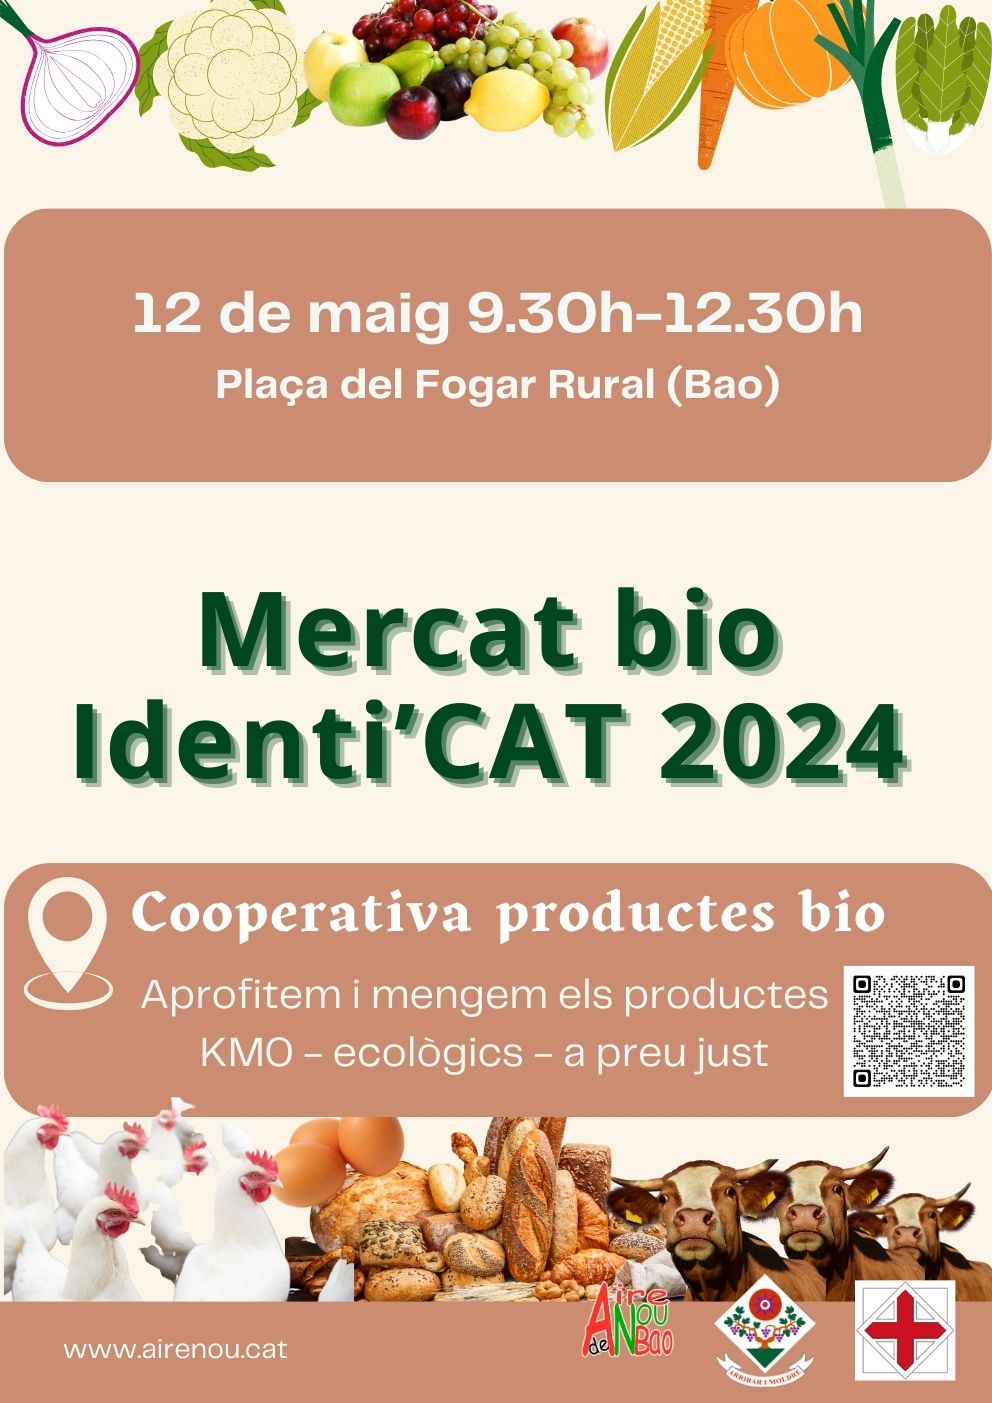 Mercat Bio Identi'CAT 2024